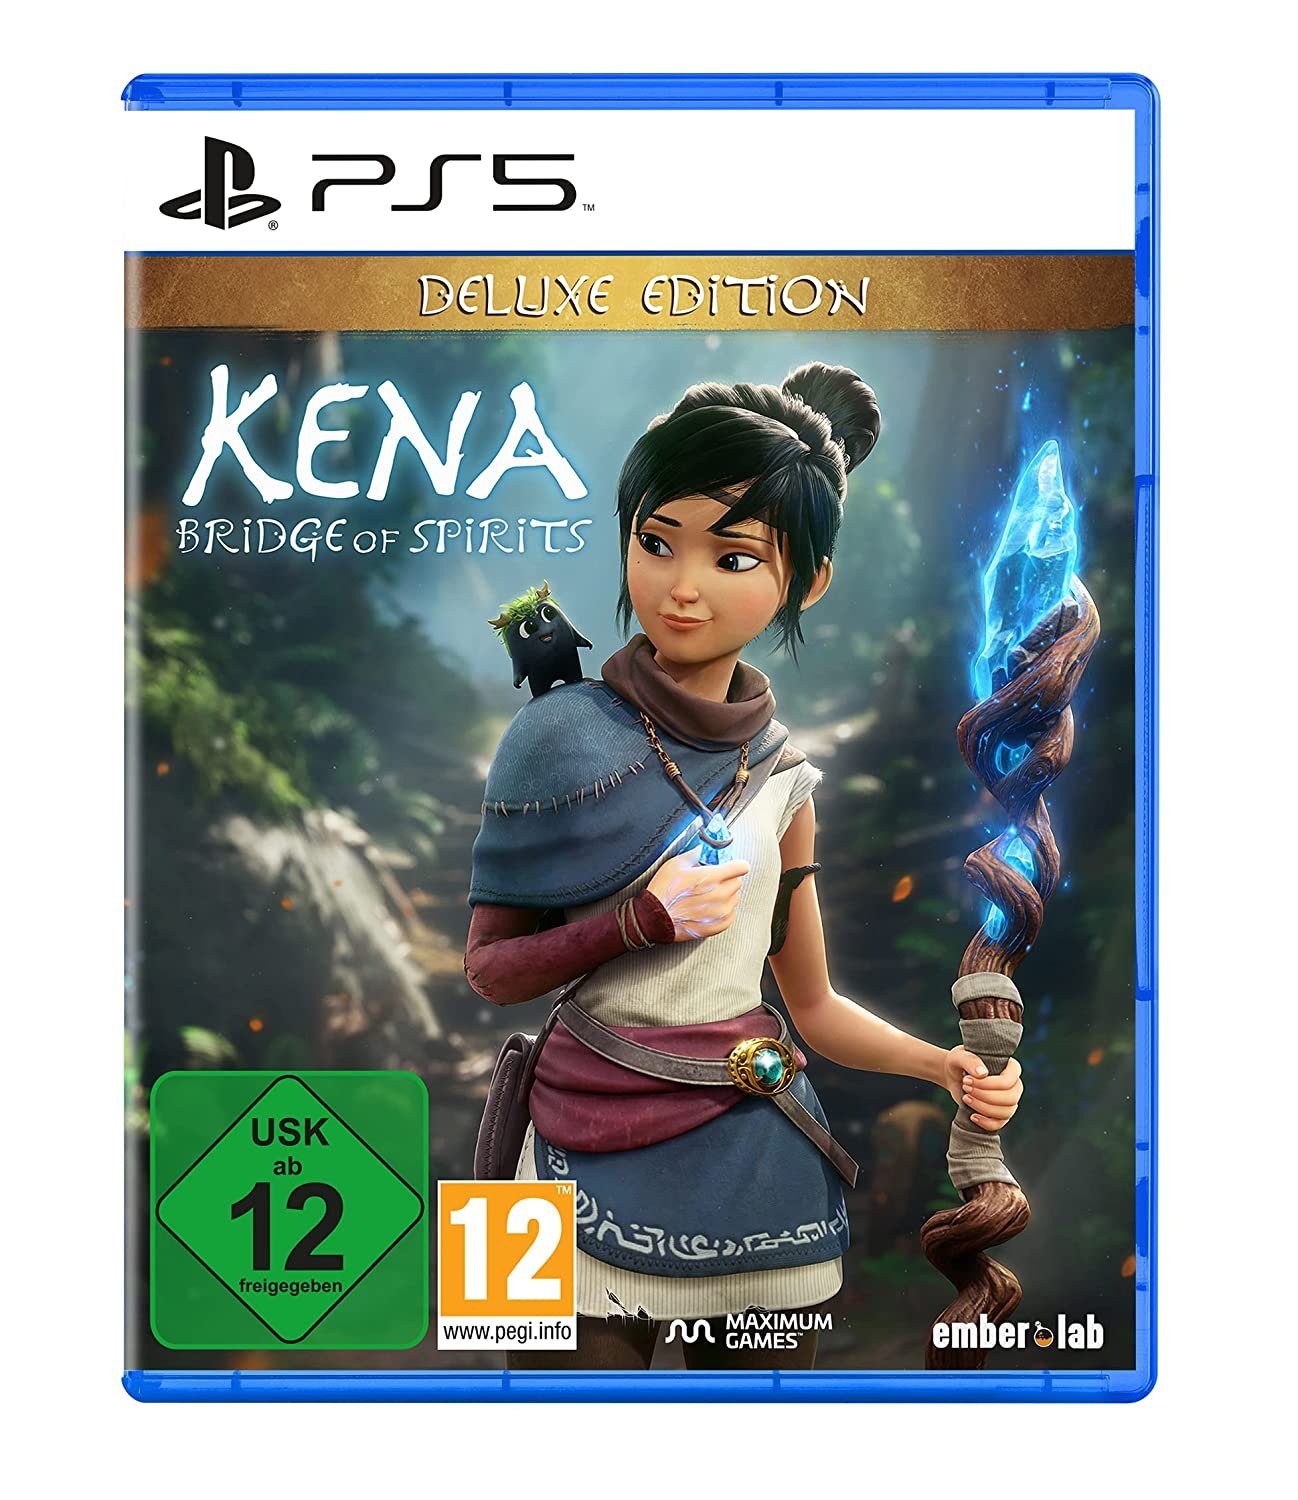 Kena: Edition - Deluxe 5 Spirits Bridge PlayStation Astragon of